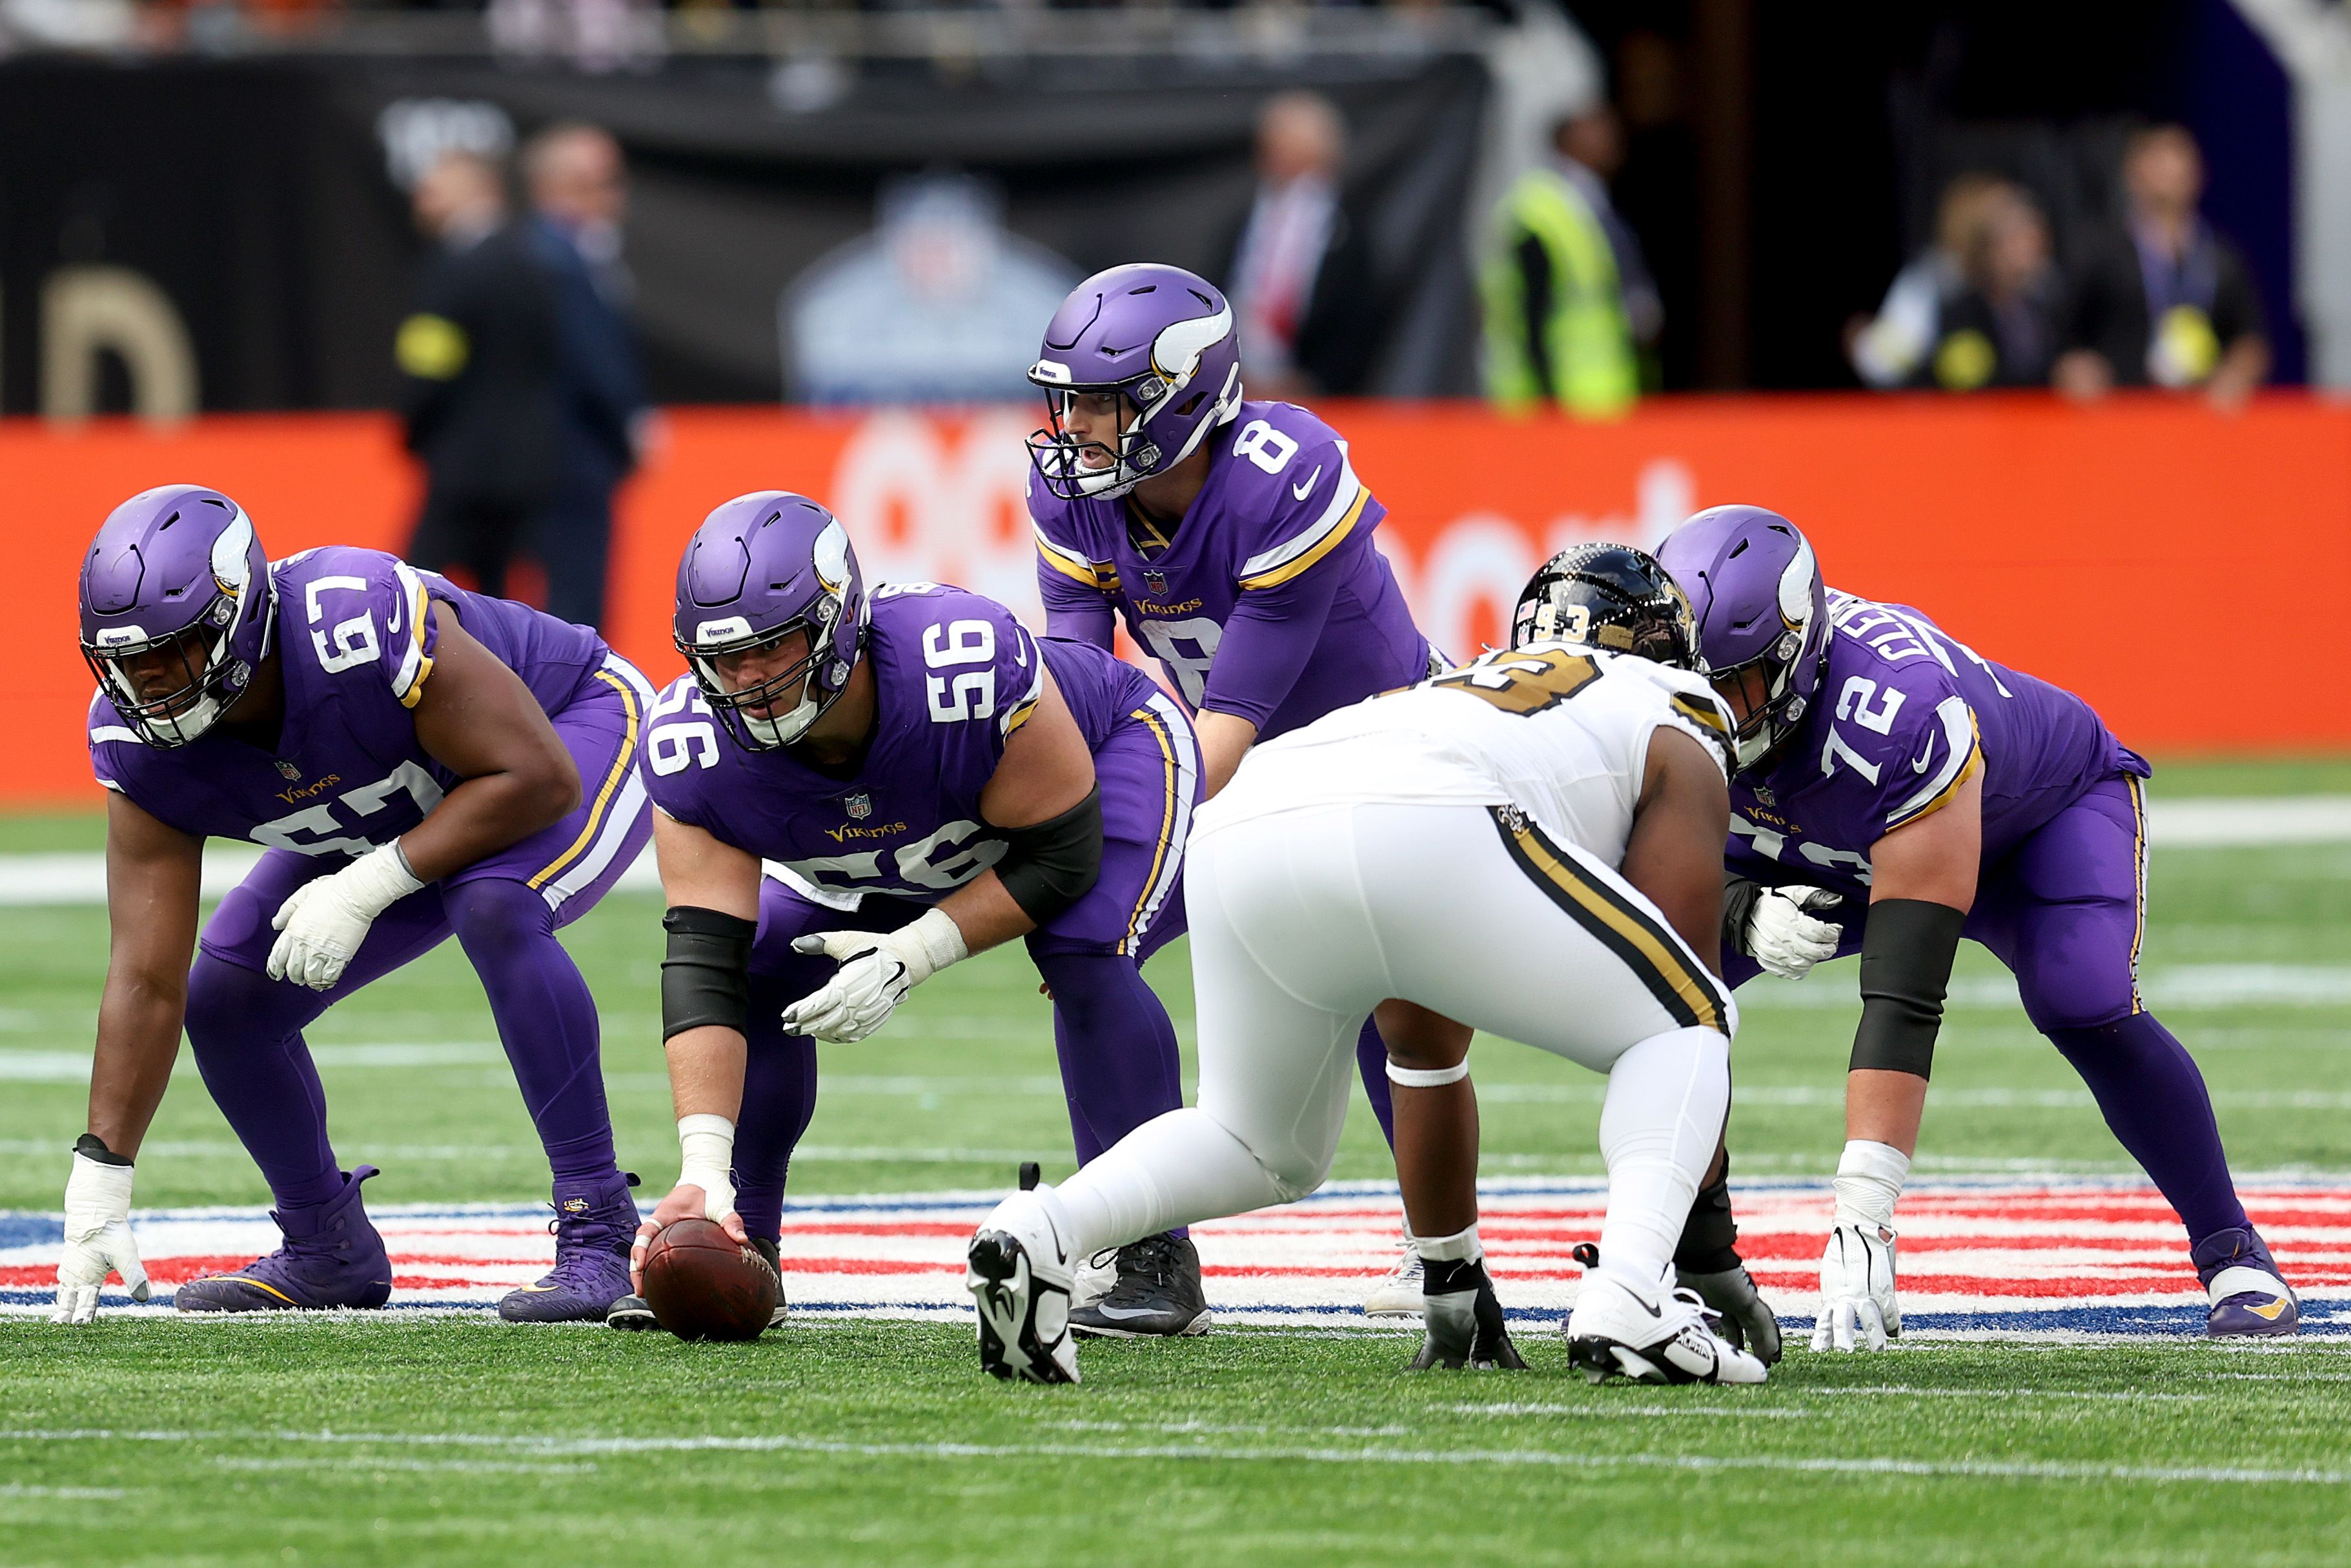 Vikings top Saints 28-25 in NFL's first London game this season